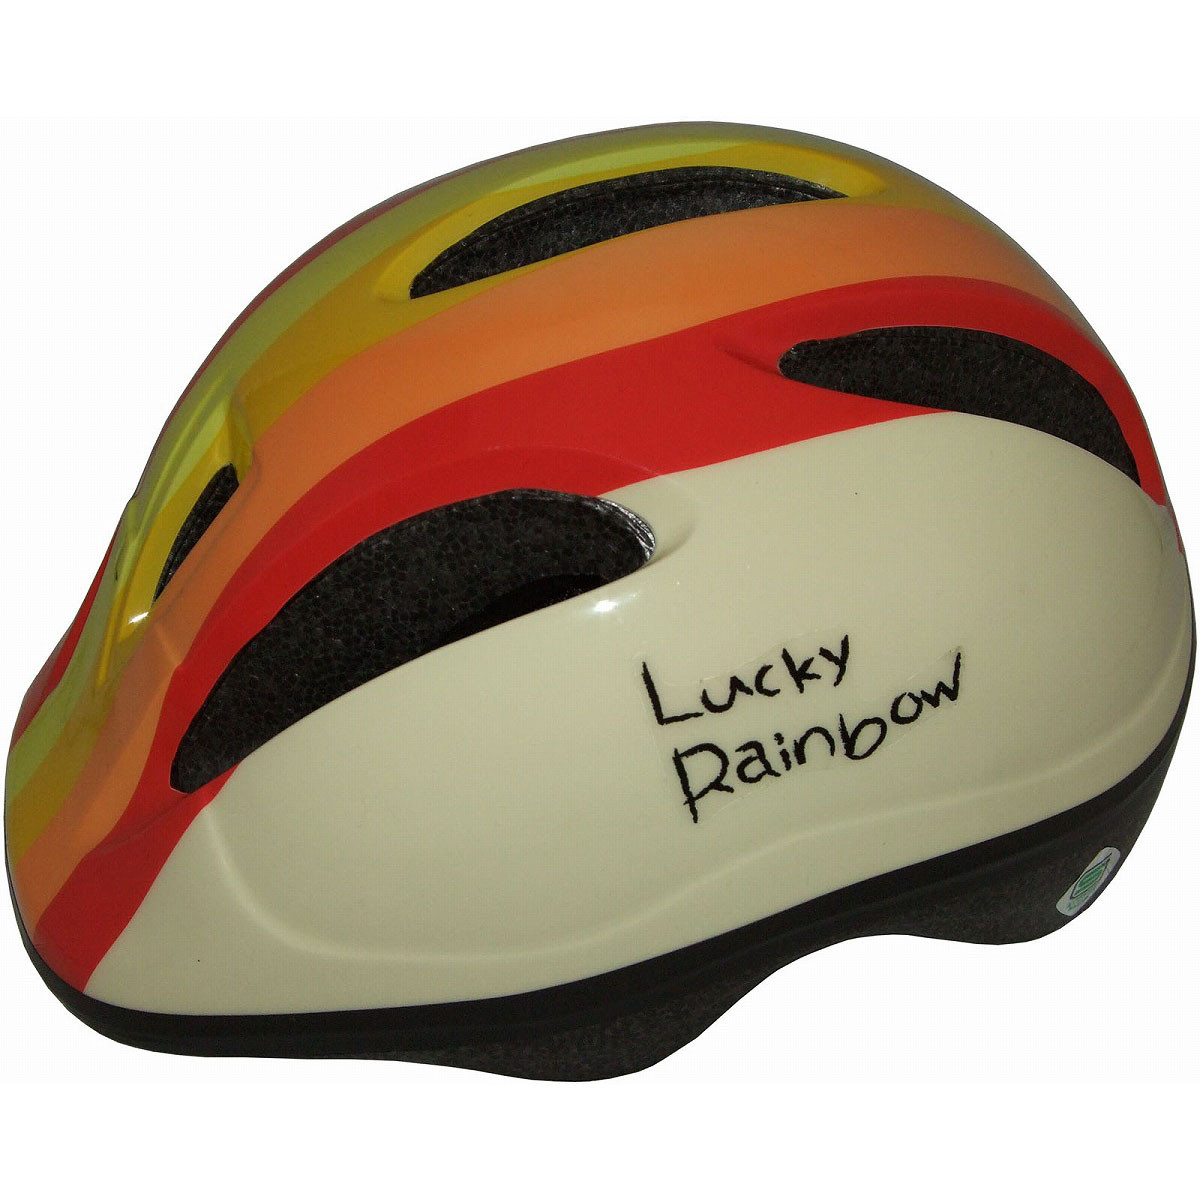 rainbow cycle helmet